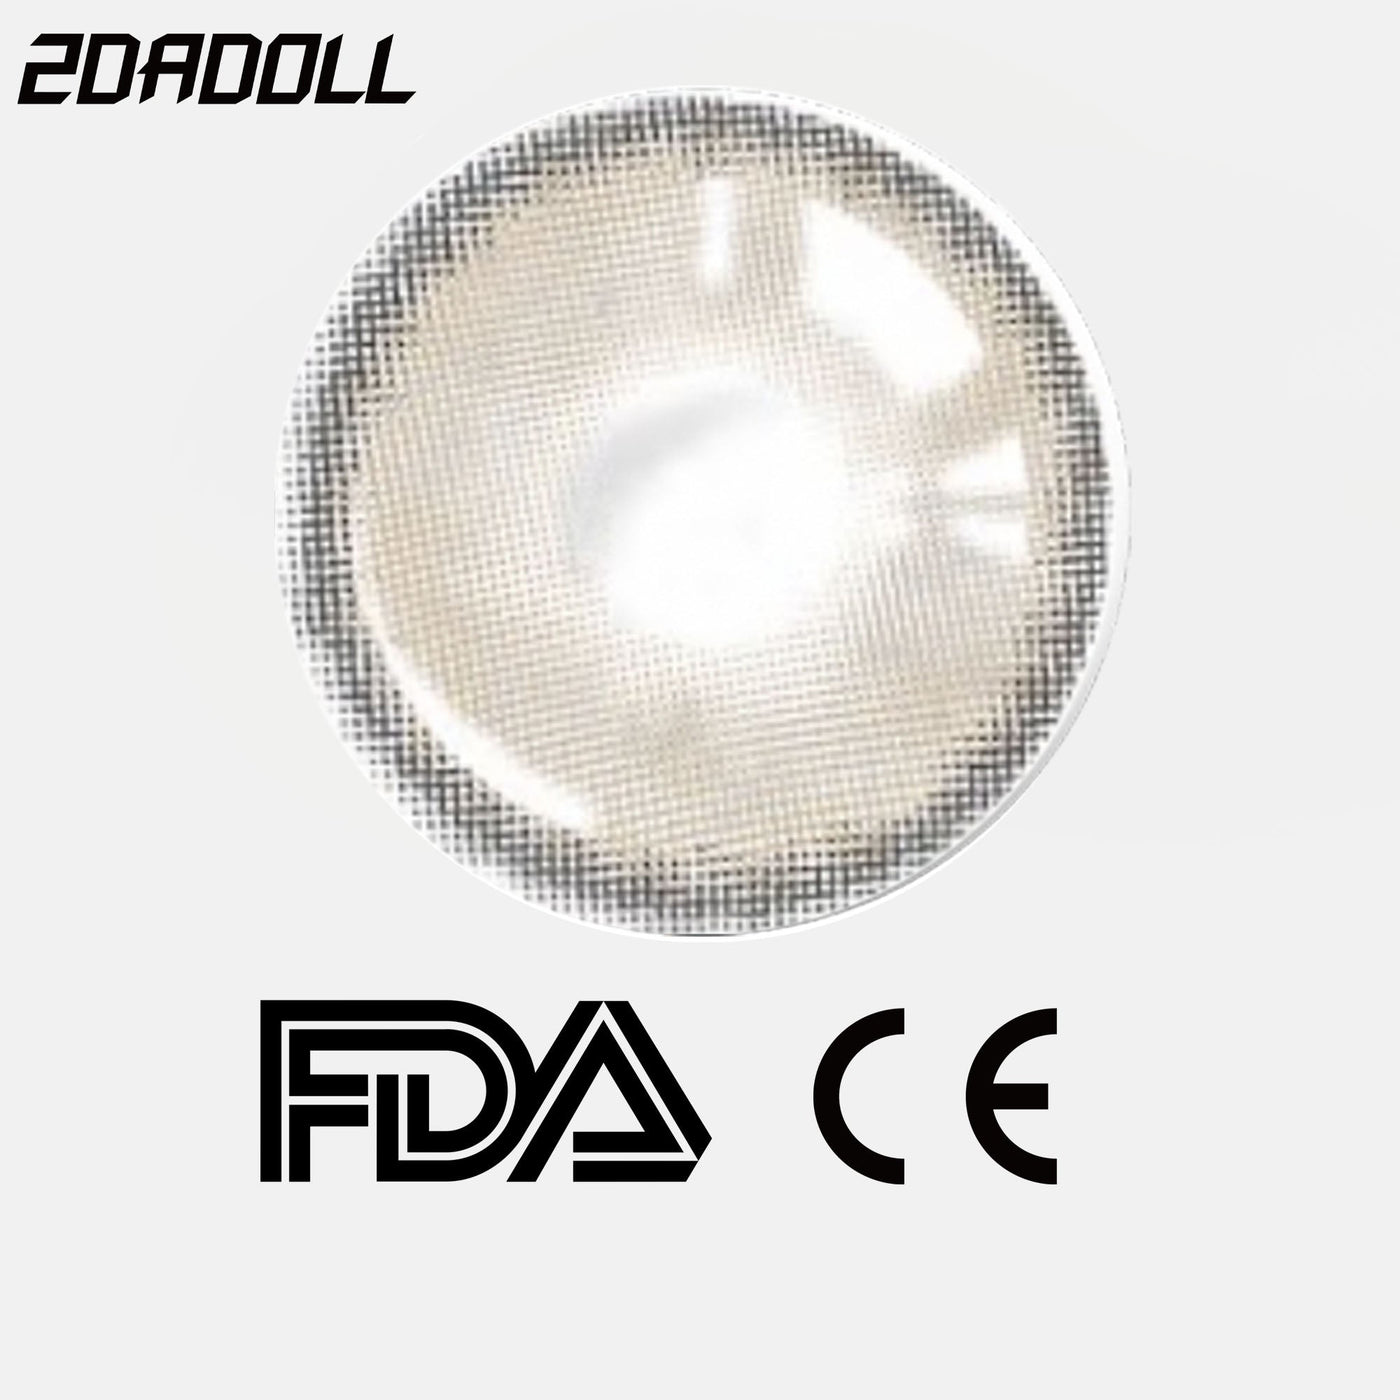 2Dadoll Carti grey Contact Lenses(1 pair/6 months)